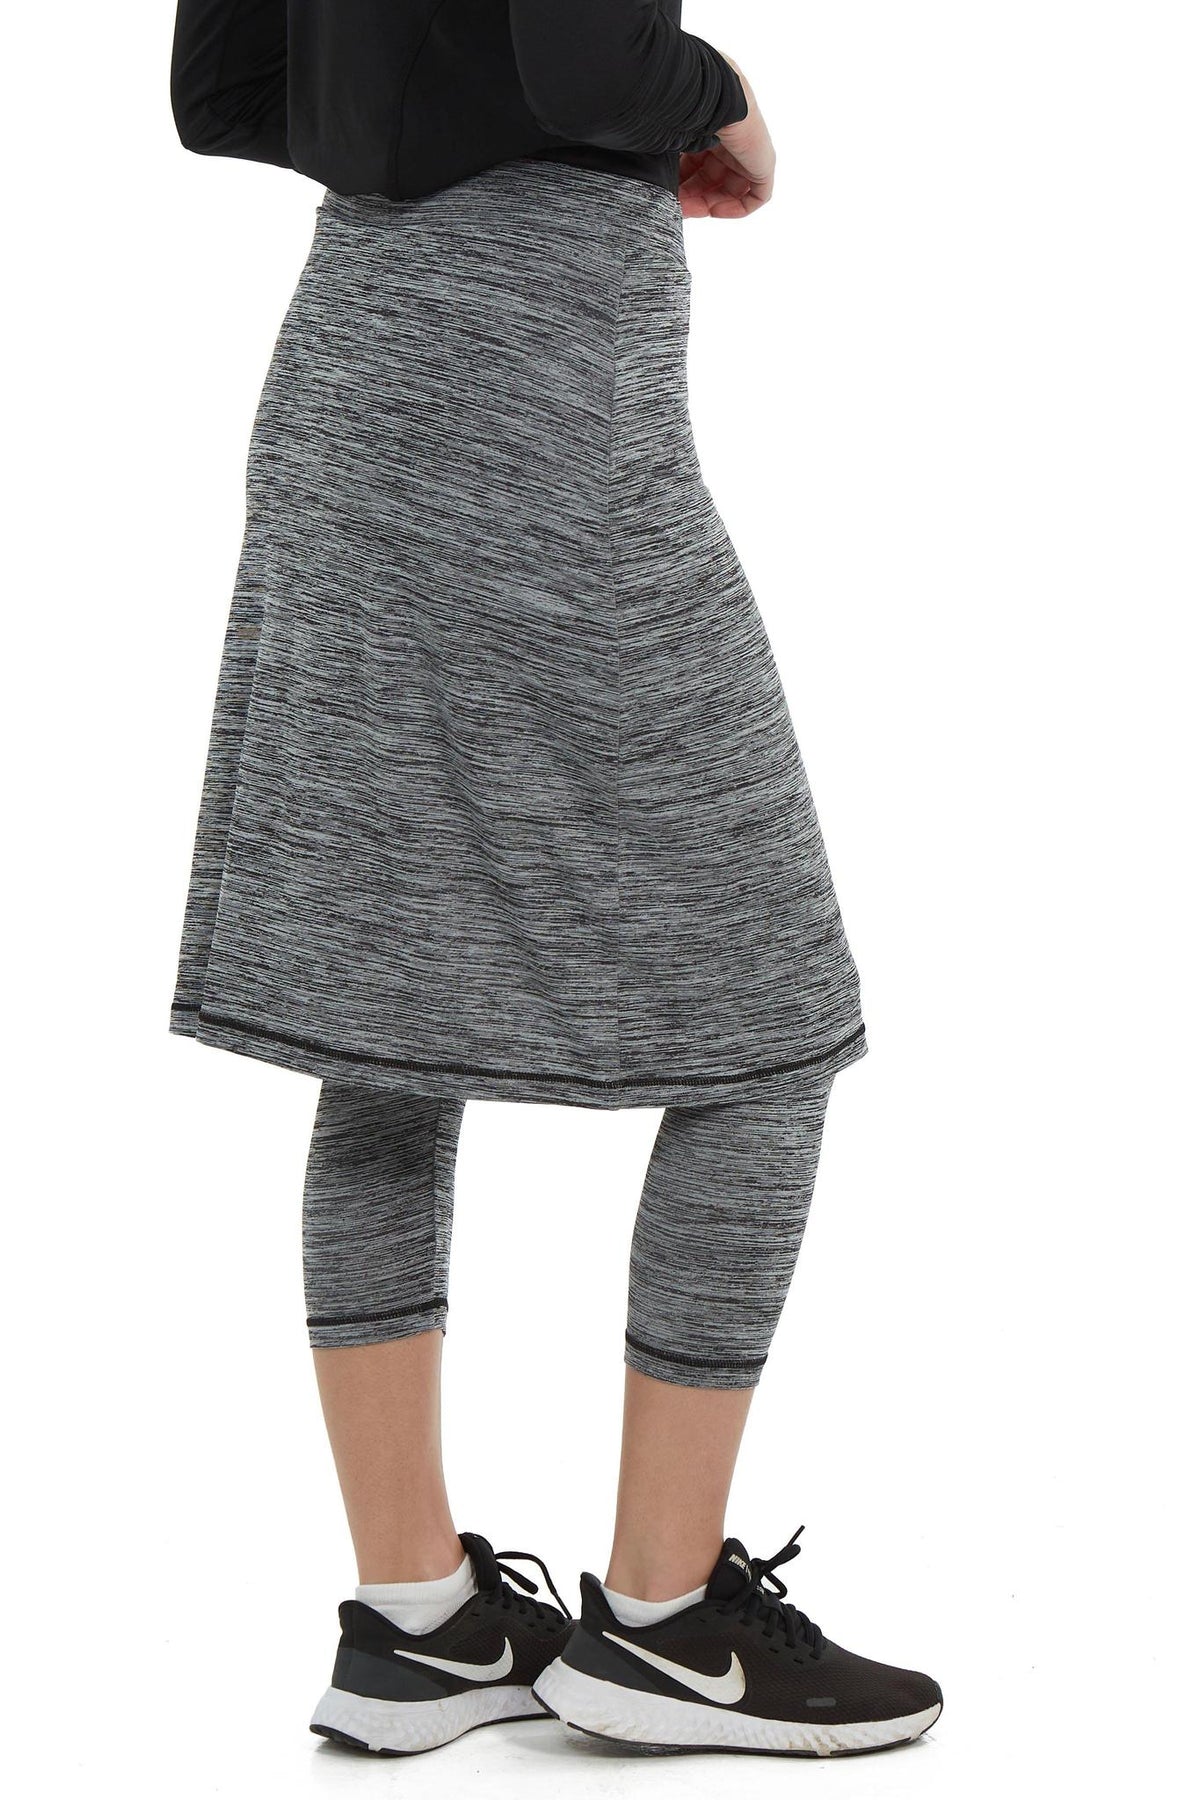 SpaceDye Snoga Athletic Skirt in Grey – Jupe De Abby